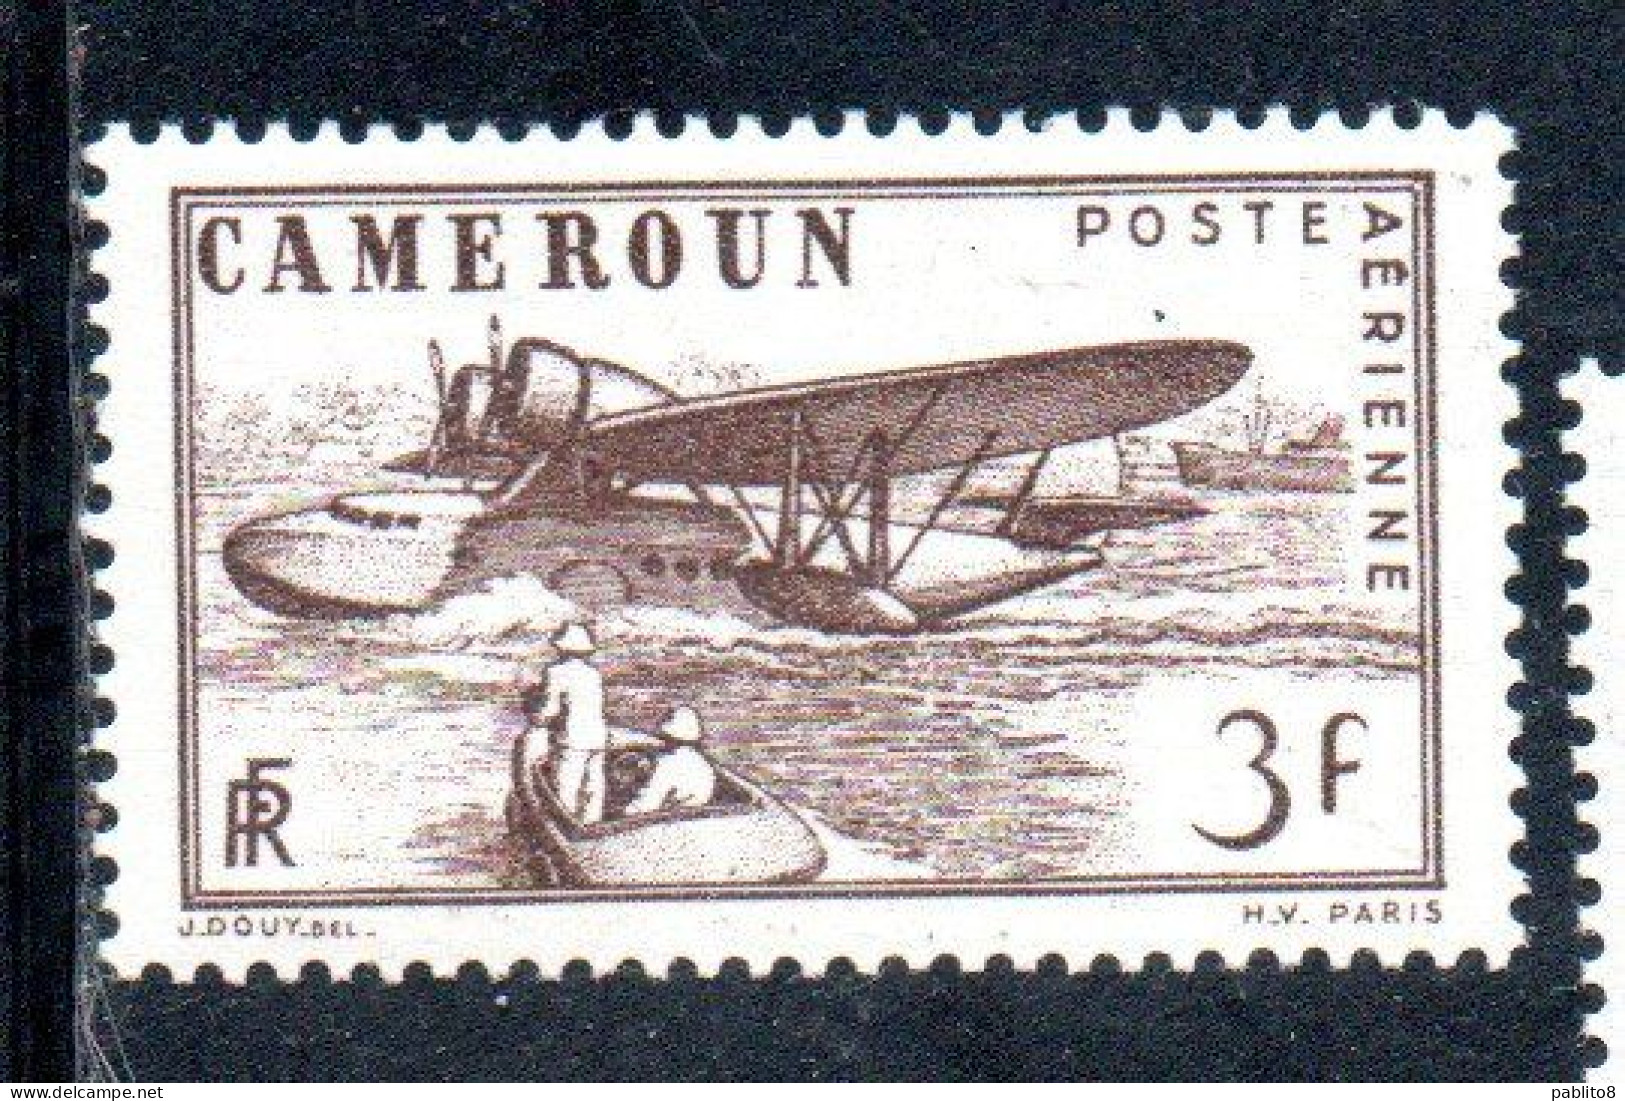 CAMEROUN CAMERUN 1943 1944 AIR POST MAIL AIRMAIL POSTA AEREA POST AERIENNE SEAPLANE ALIGHTING 3fr MNH - Luchtpost